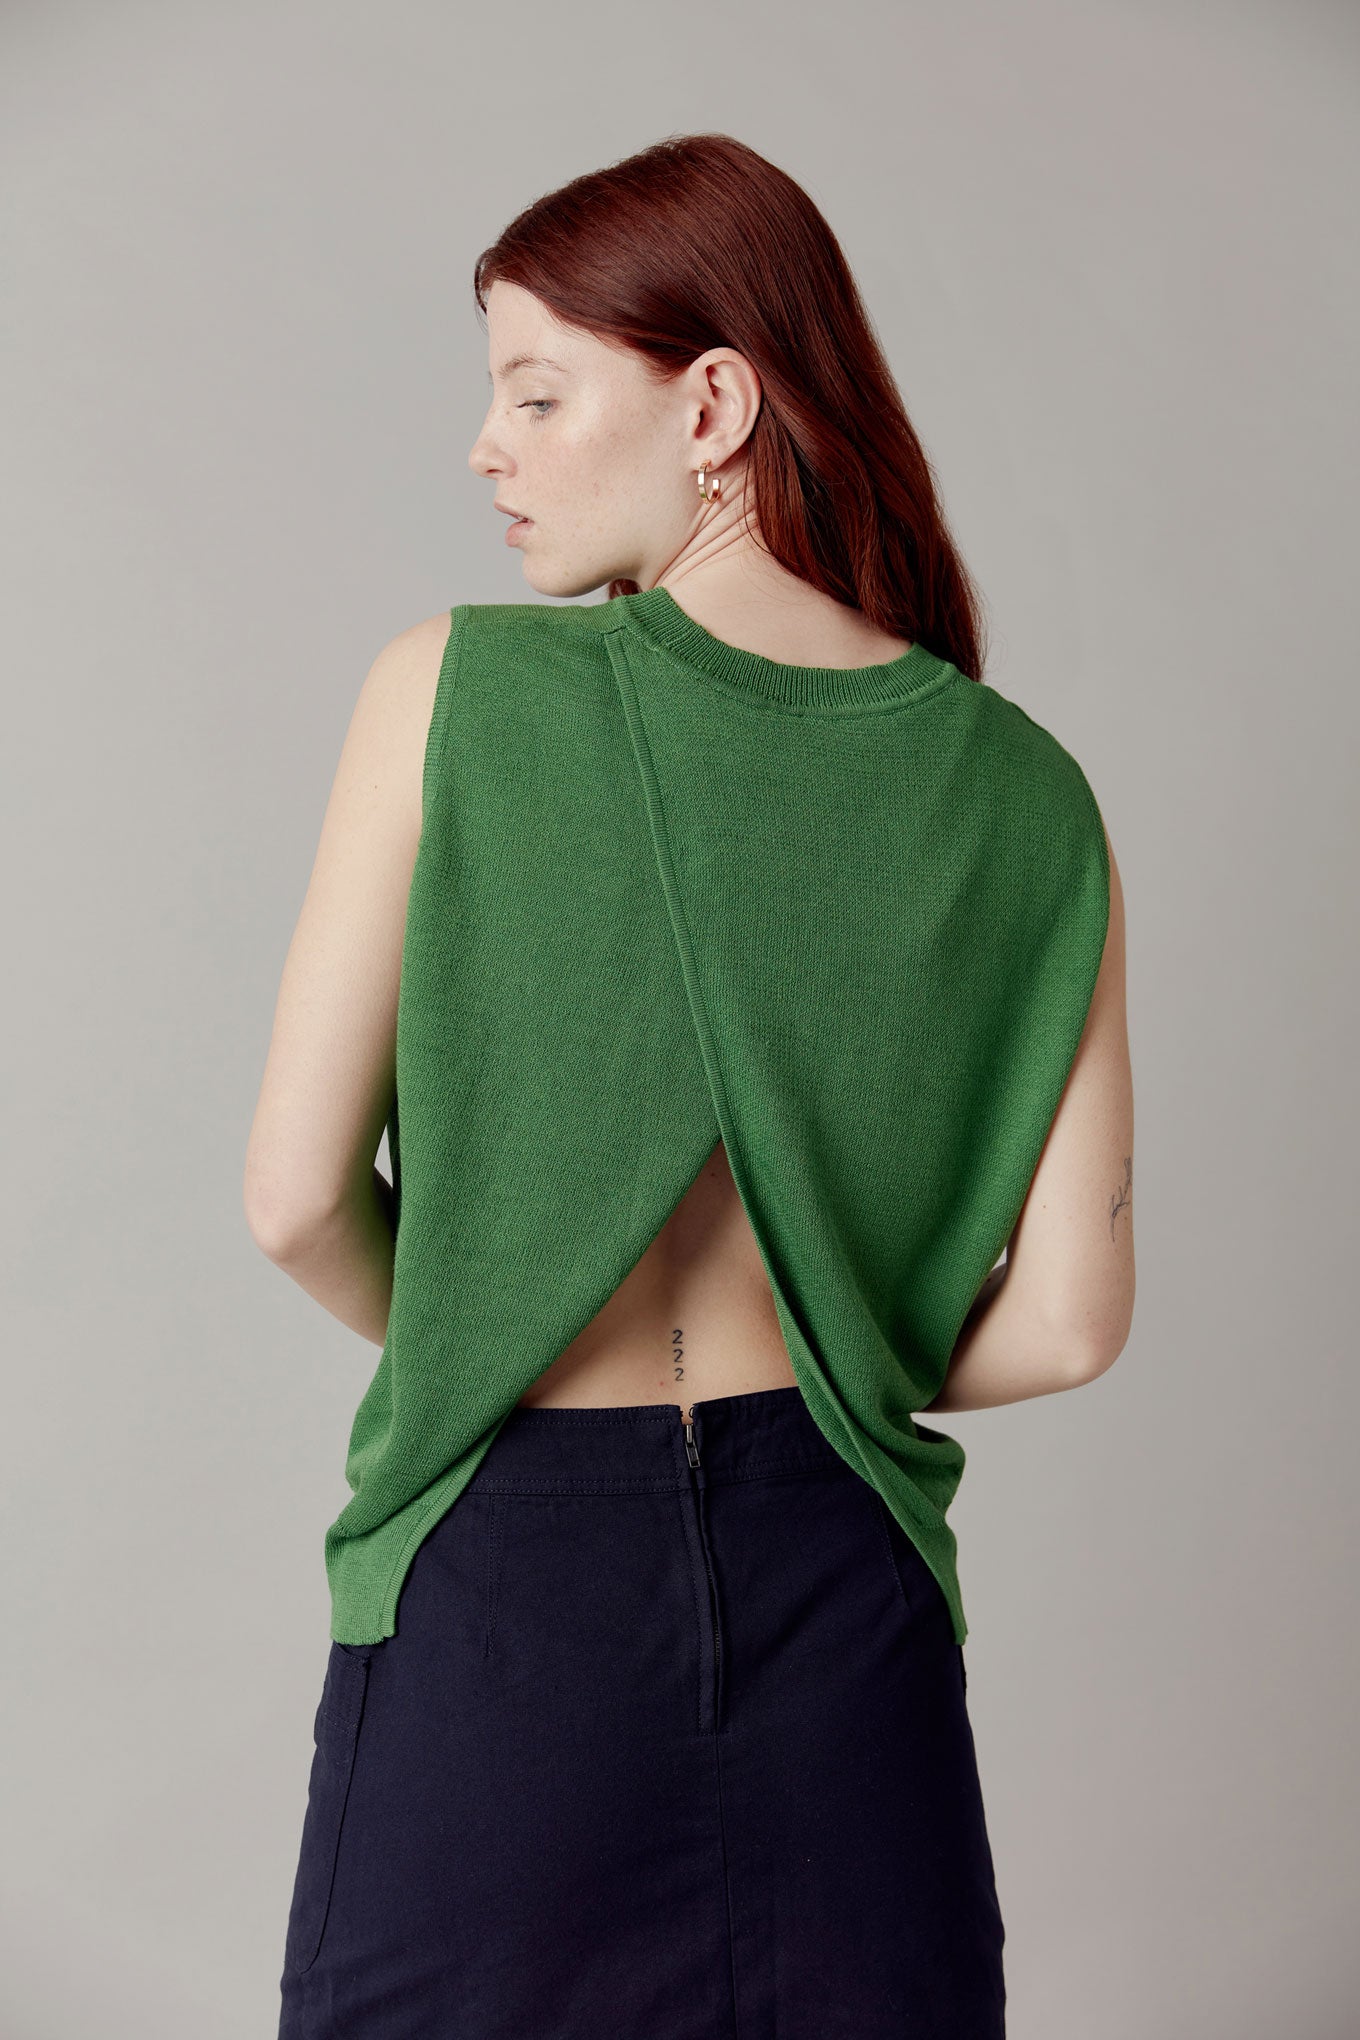 MILA Organic Cotton Vest - Summer Green, SIZE 5 / UK 16 / EUR 44